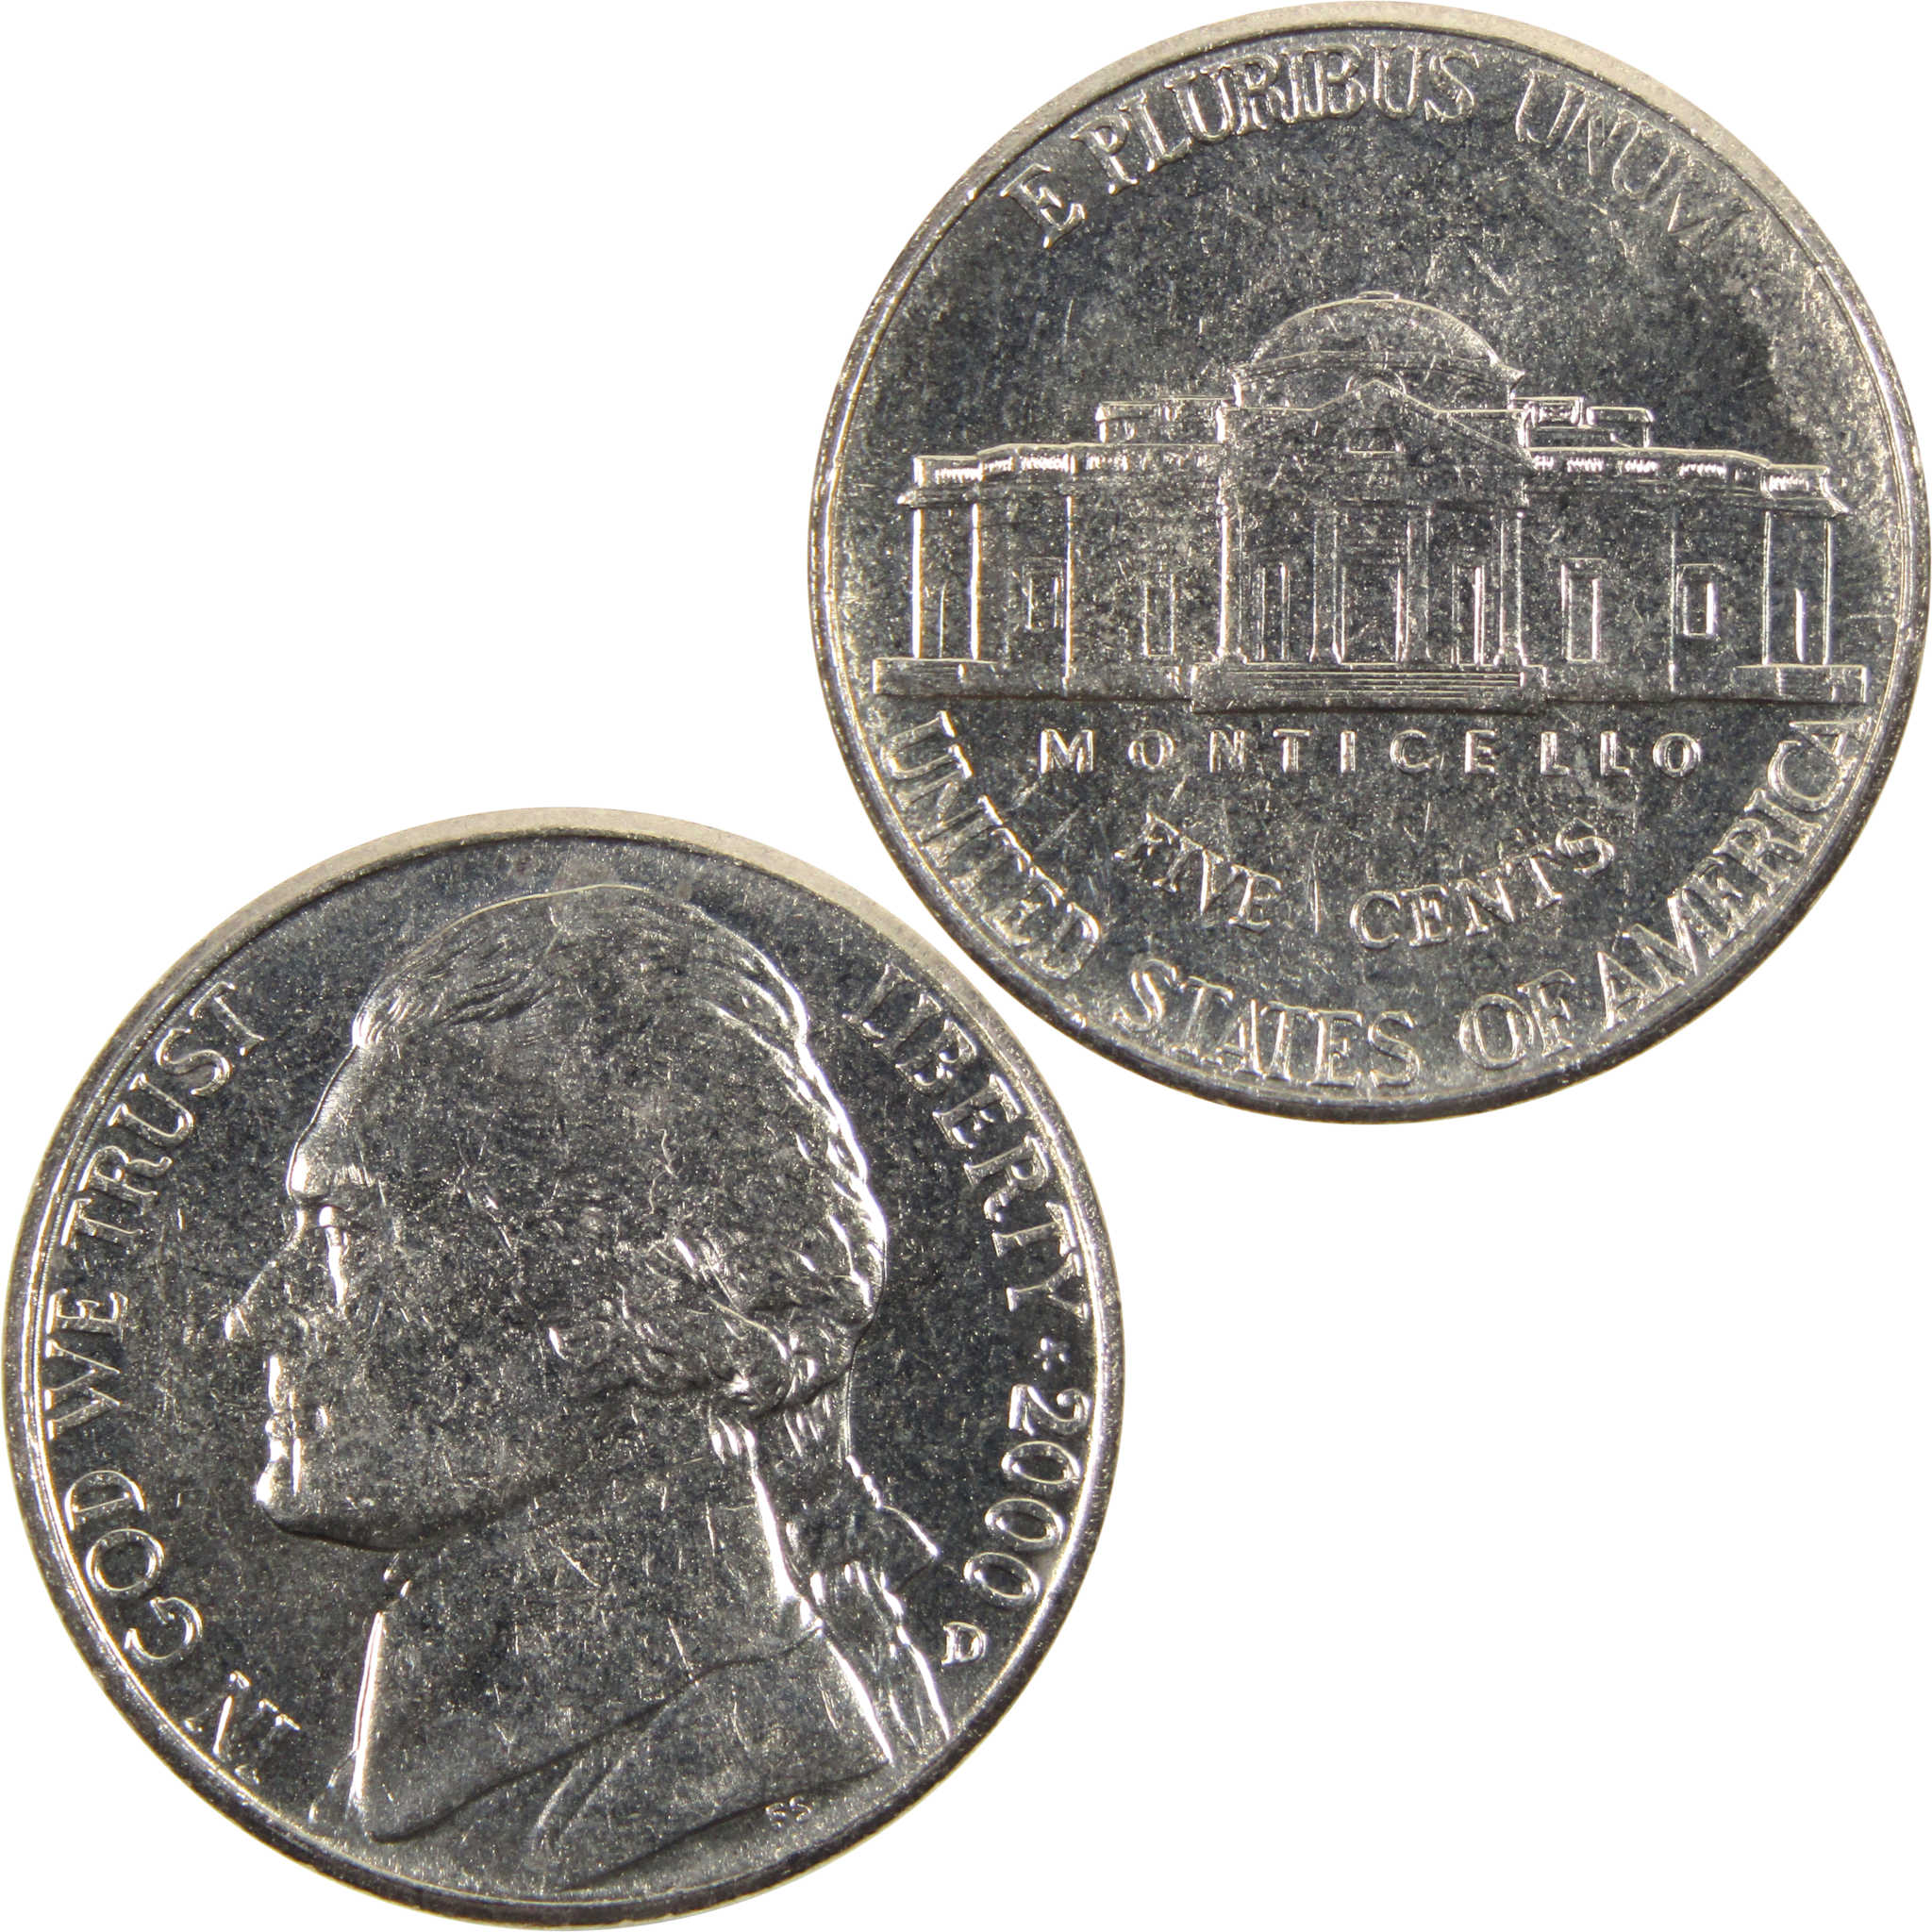 2000 D Jefferson Nickel BU Uncirculated 5c Coin